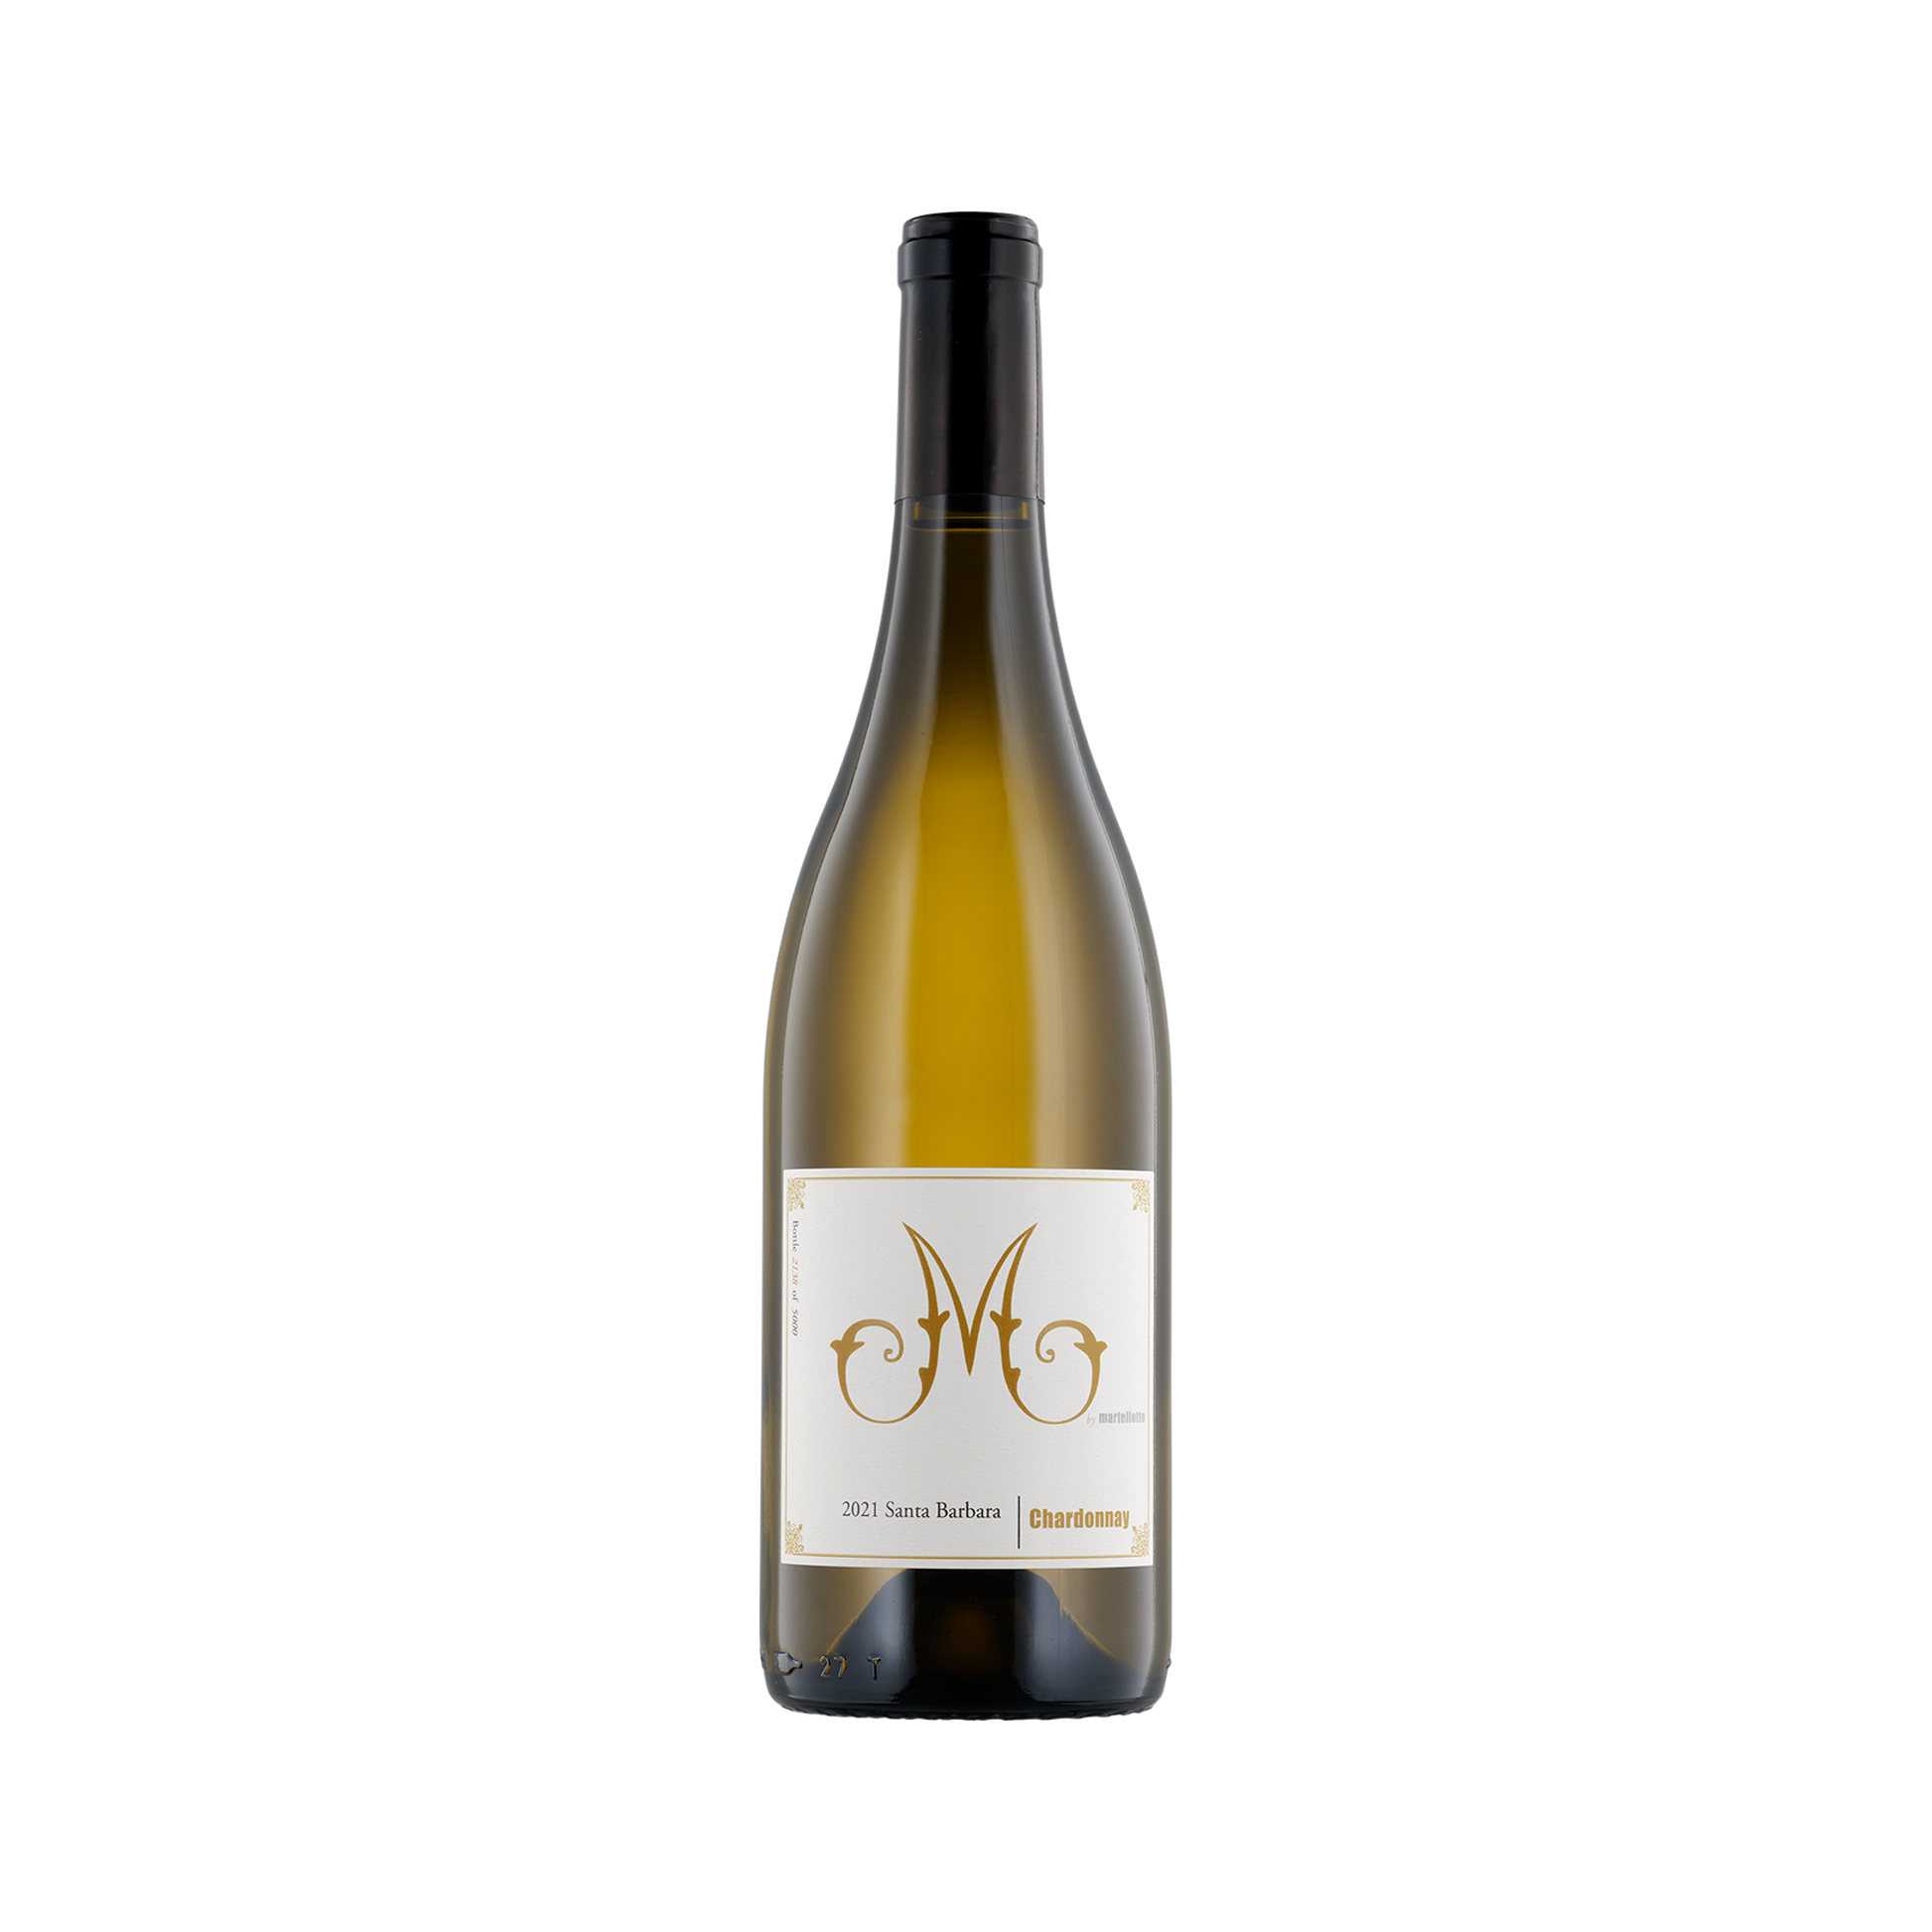 A bottle of Martellotto Wines 2021 'M' Chardonnay